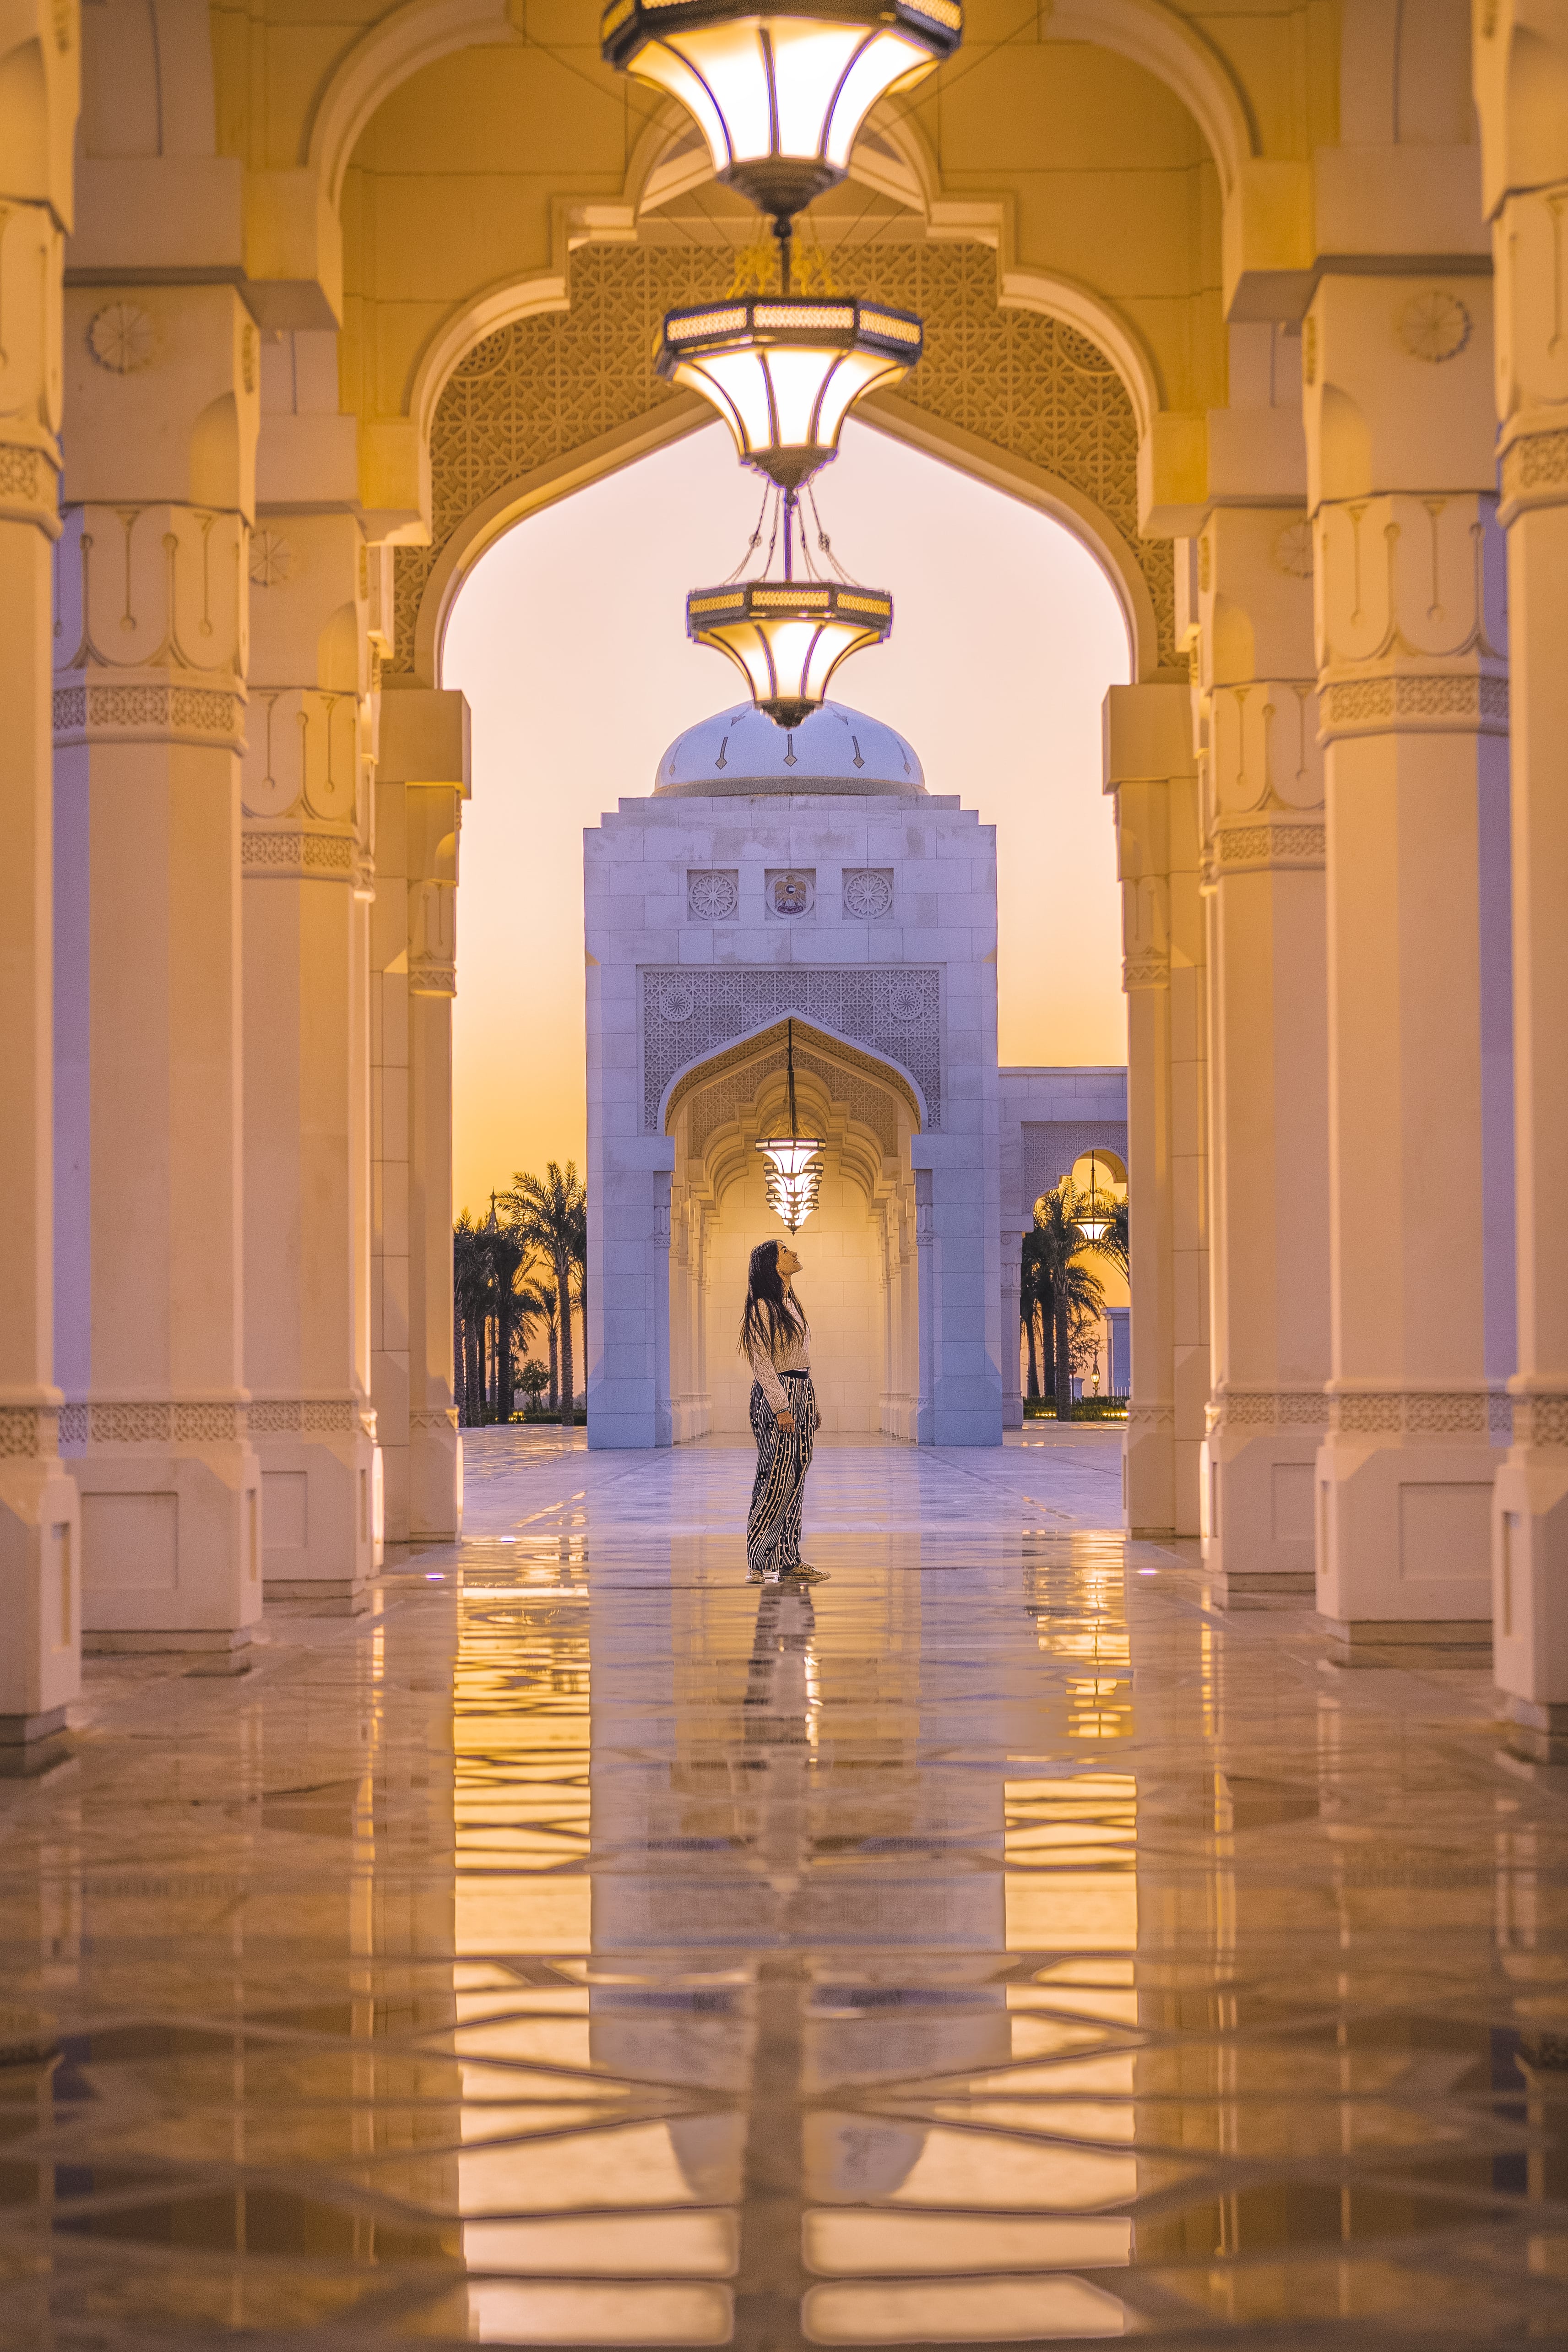 Create memories in Abu Dhabi this Diwali